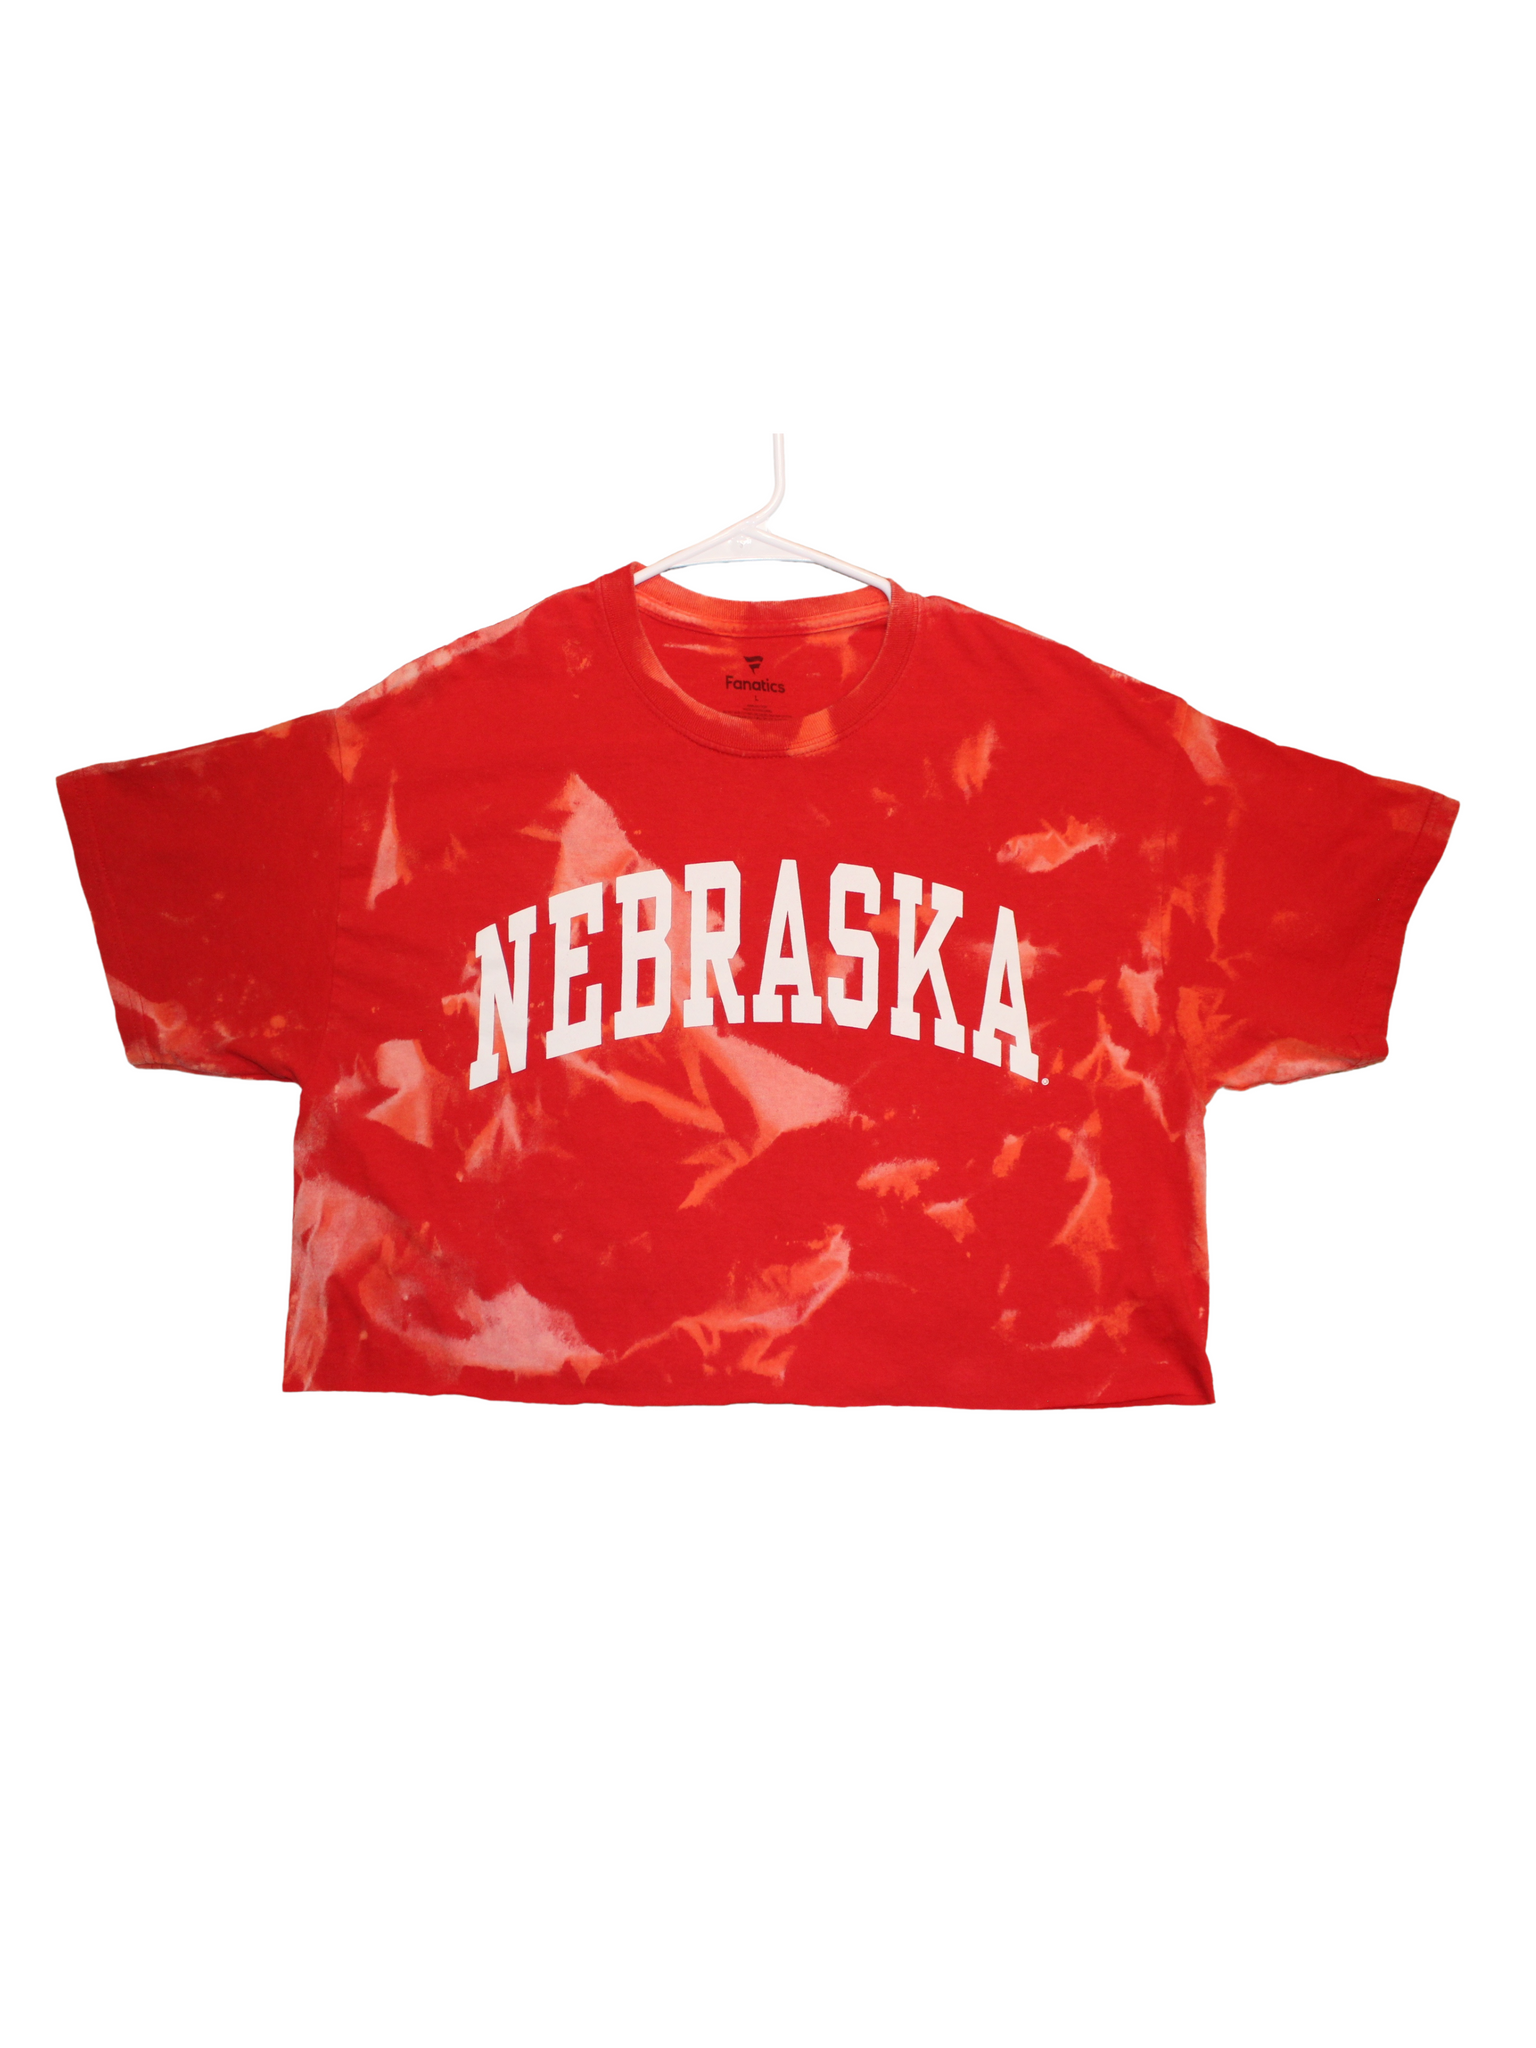 University of Nebraska Cropped & Bleached Shirt